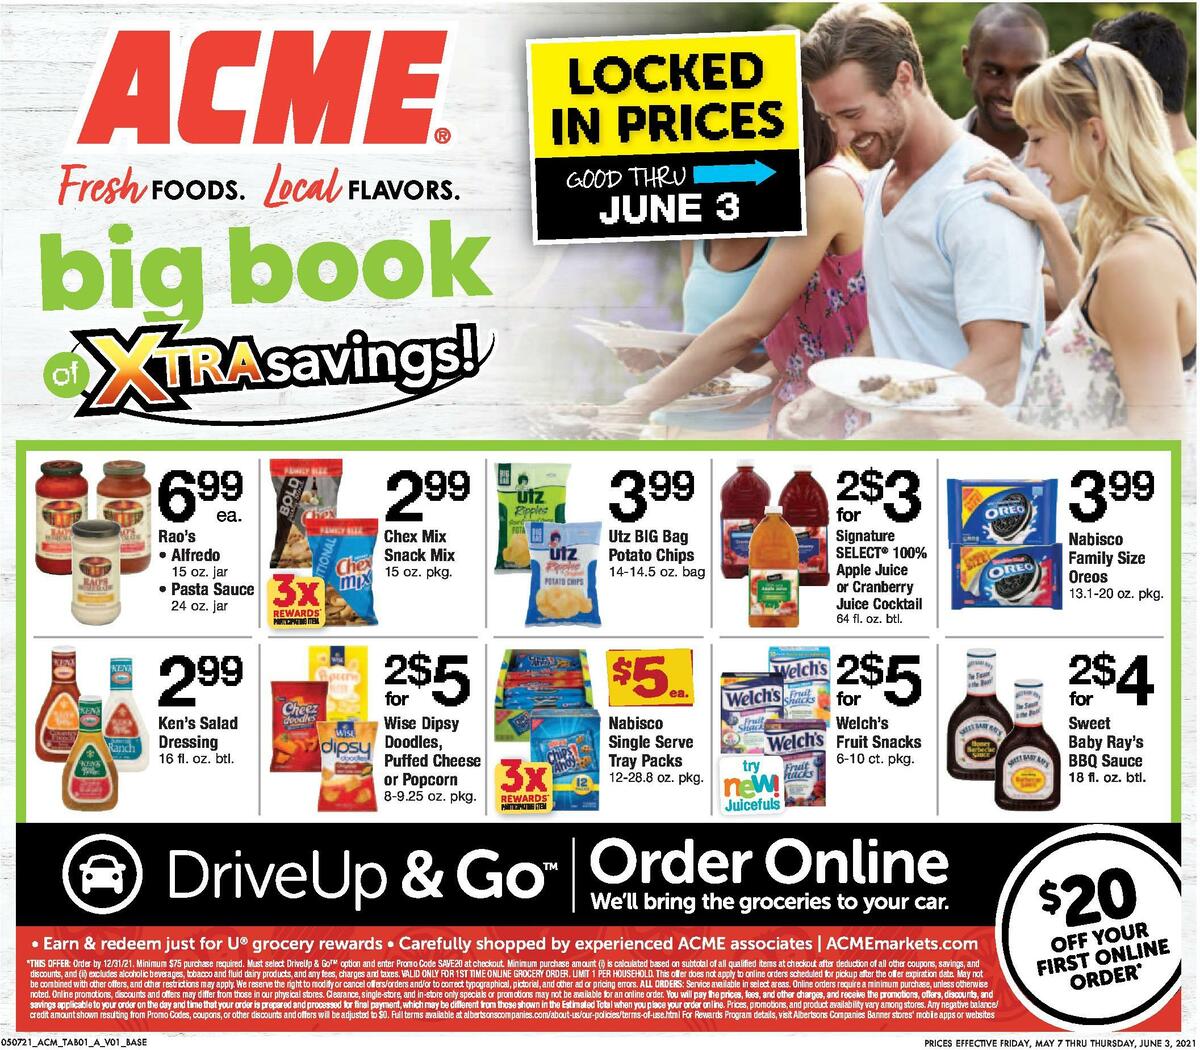 ACME Markets Big Book of Savings Weekly Ad from May 7